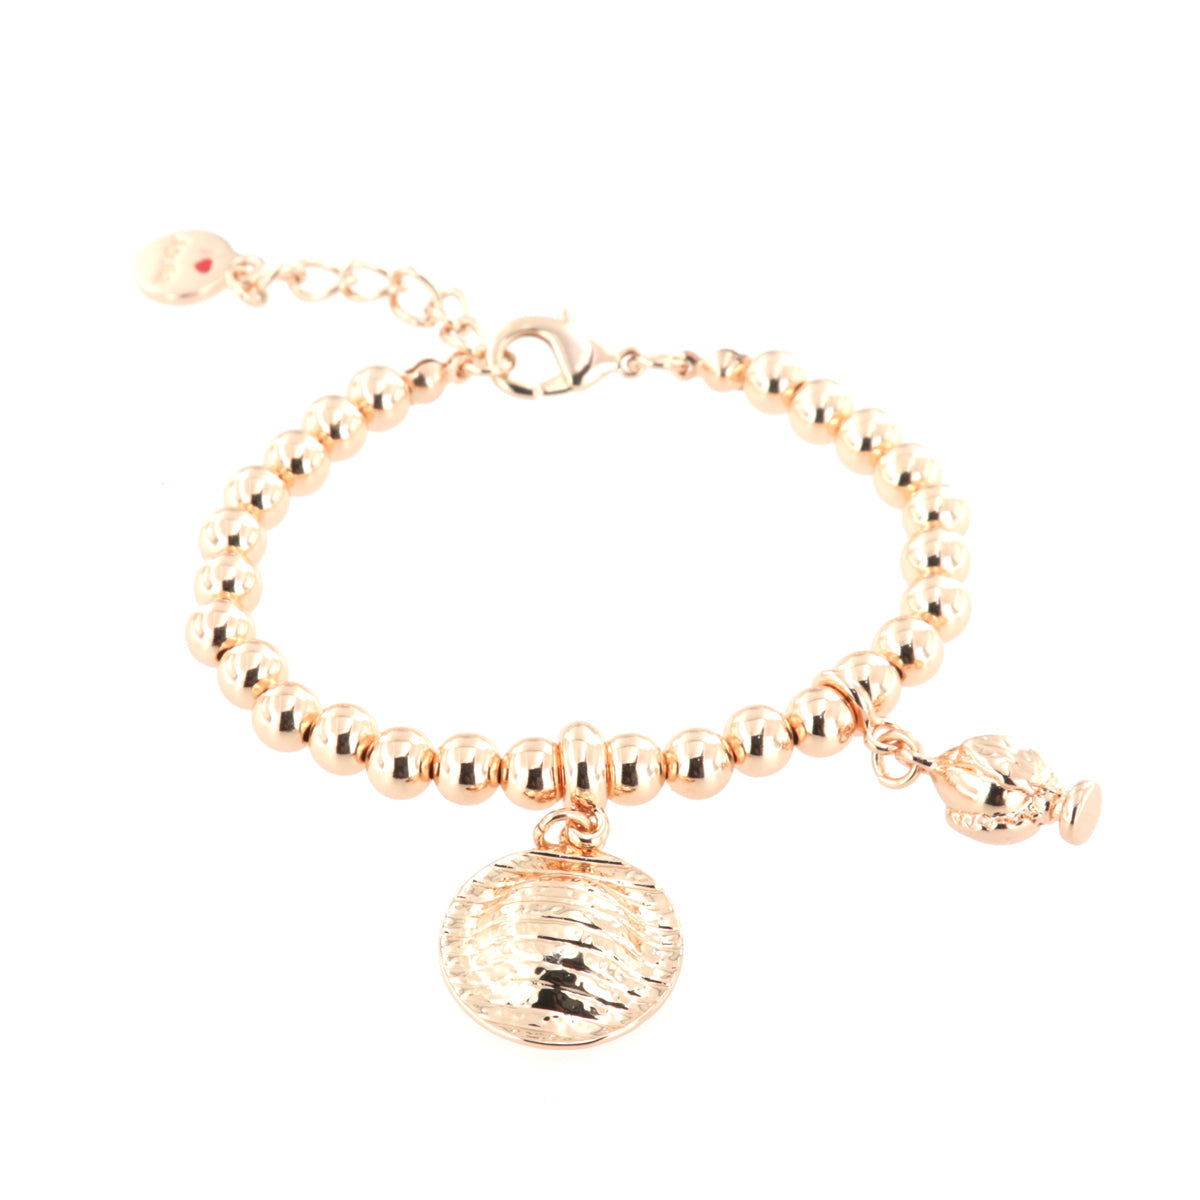 Metal bracelet with orecchietta and pendant pumo